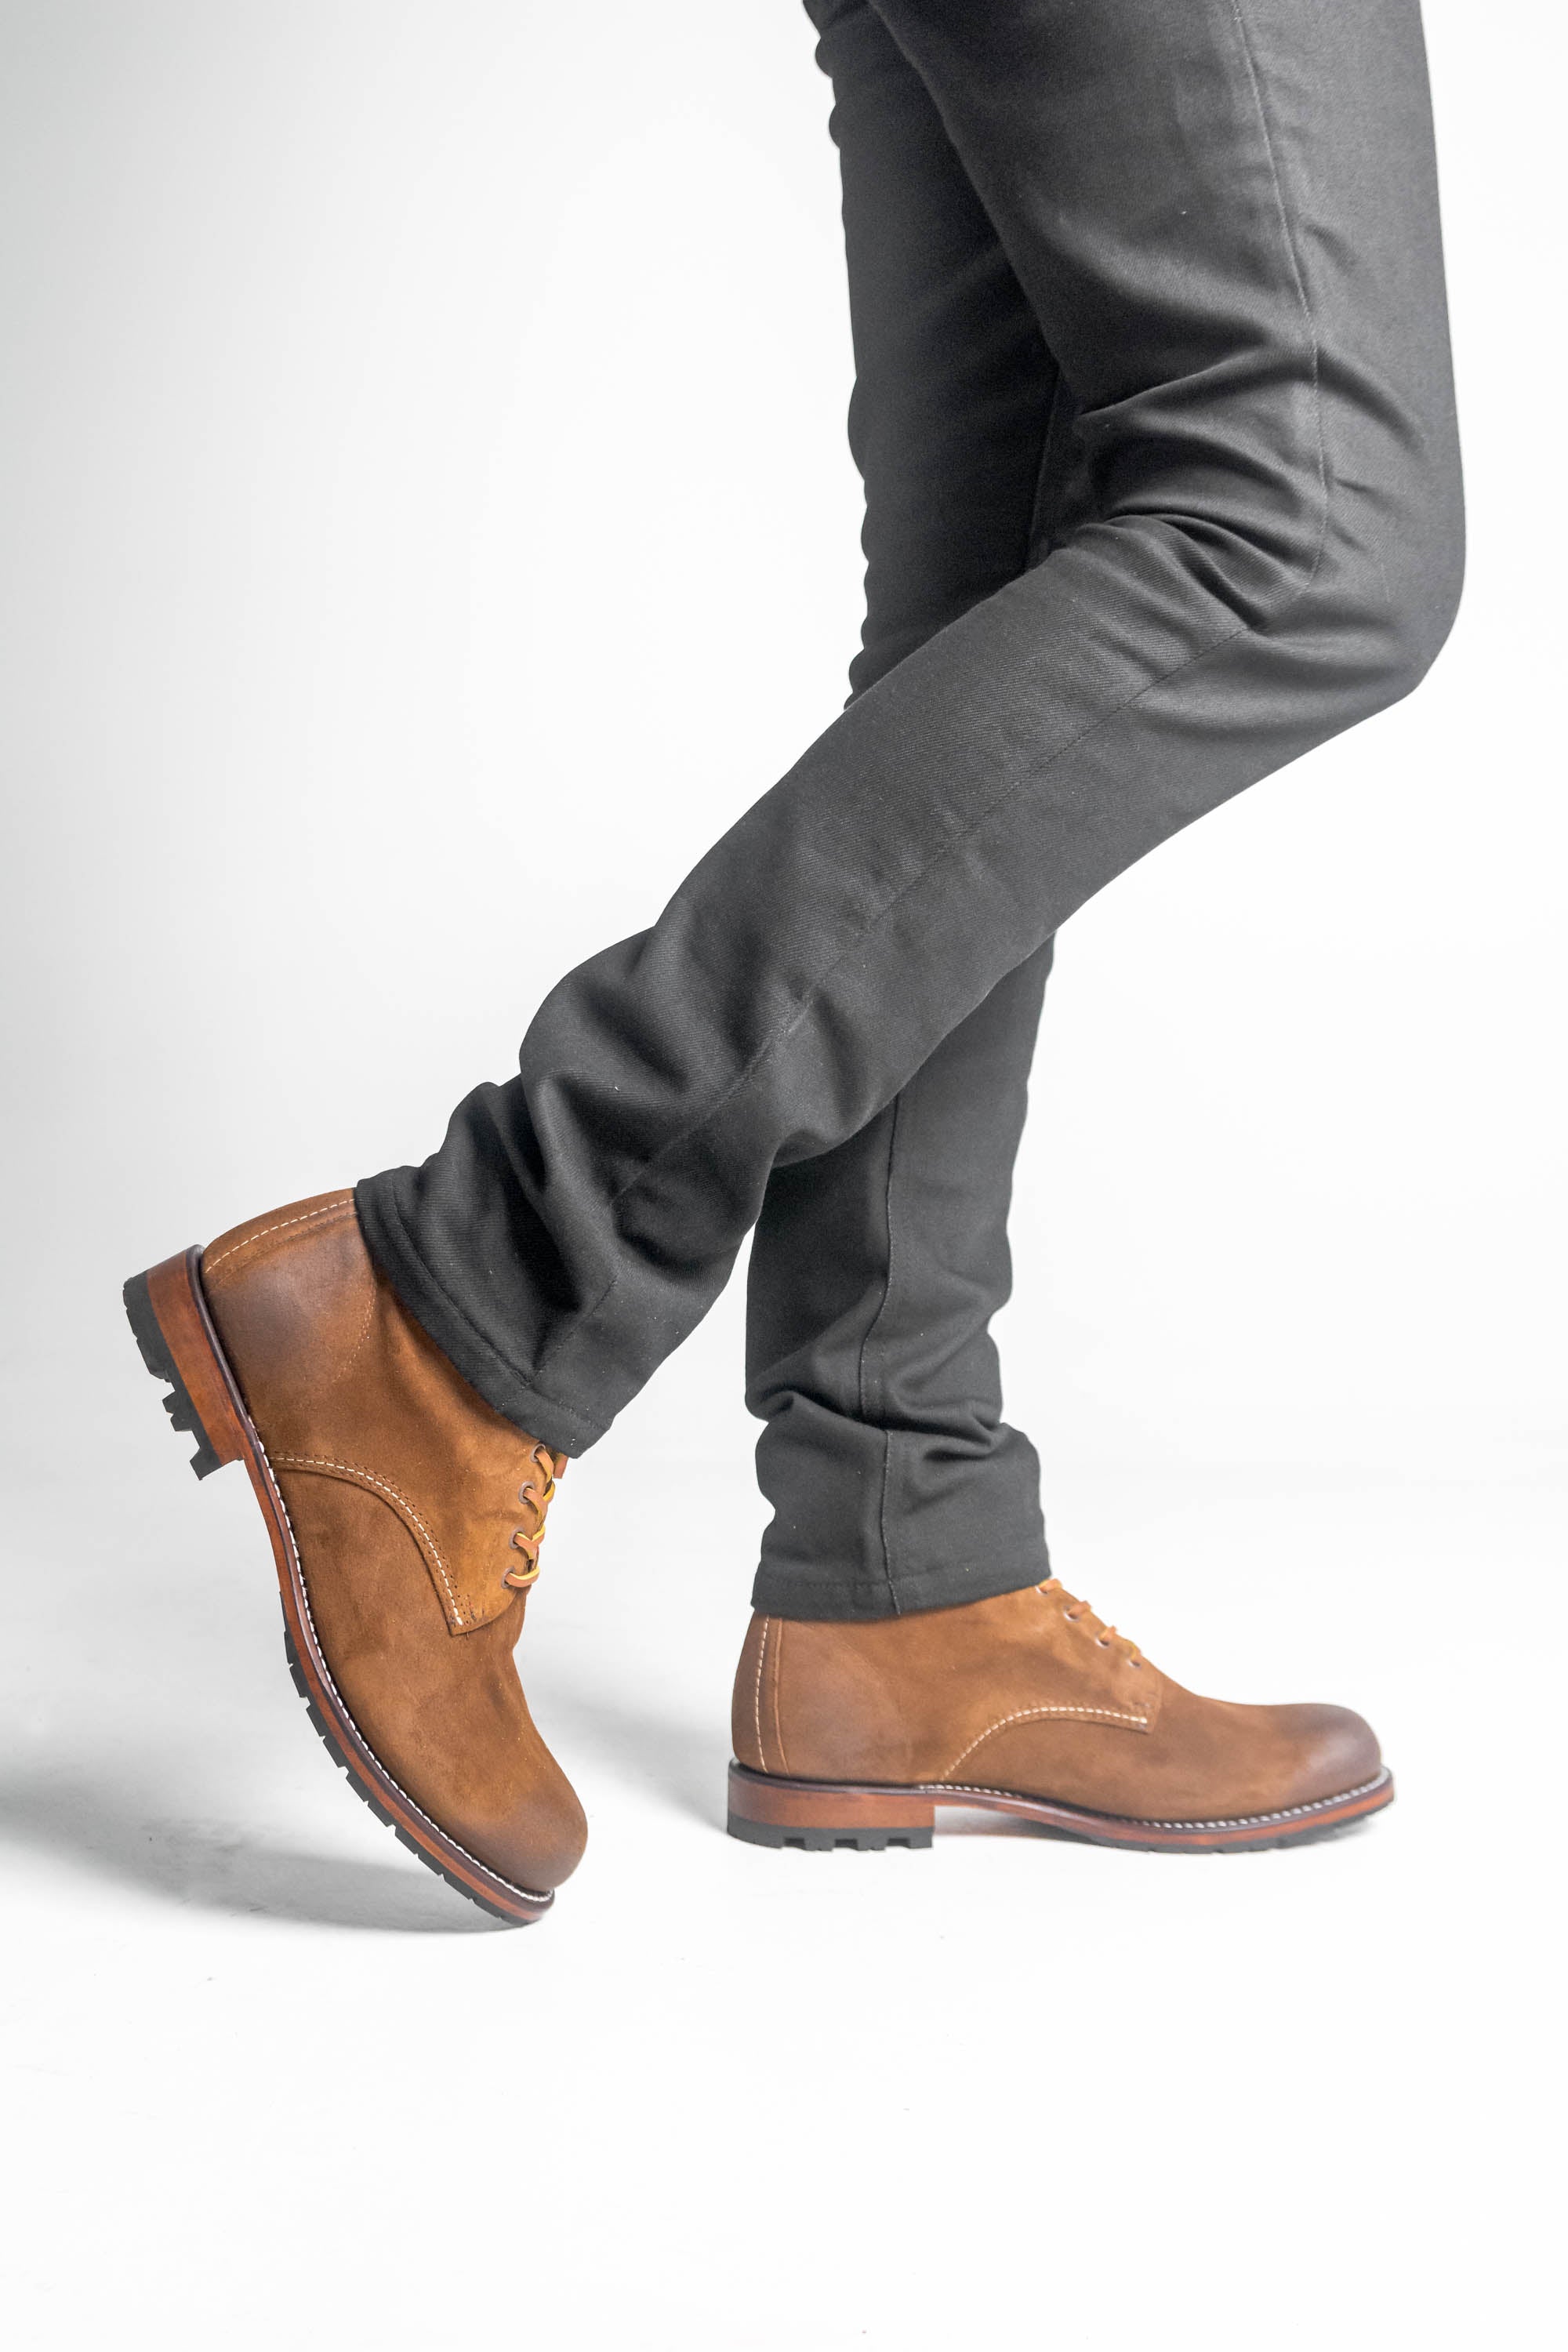 Rua - Mens Tan Leather Boots MERLA MOTO